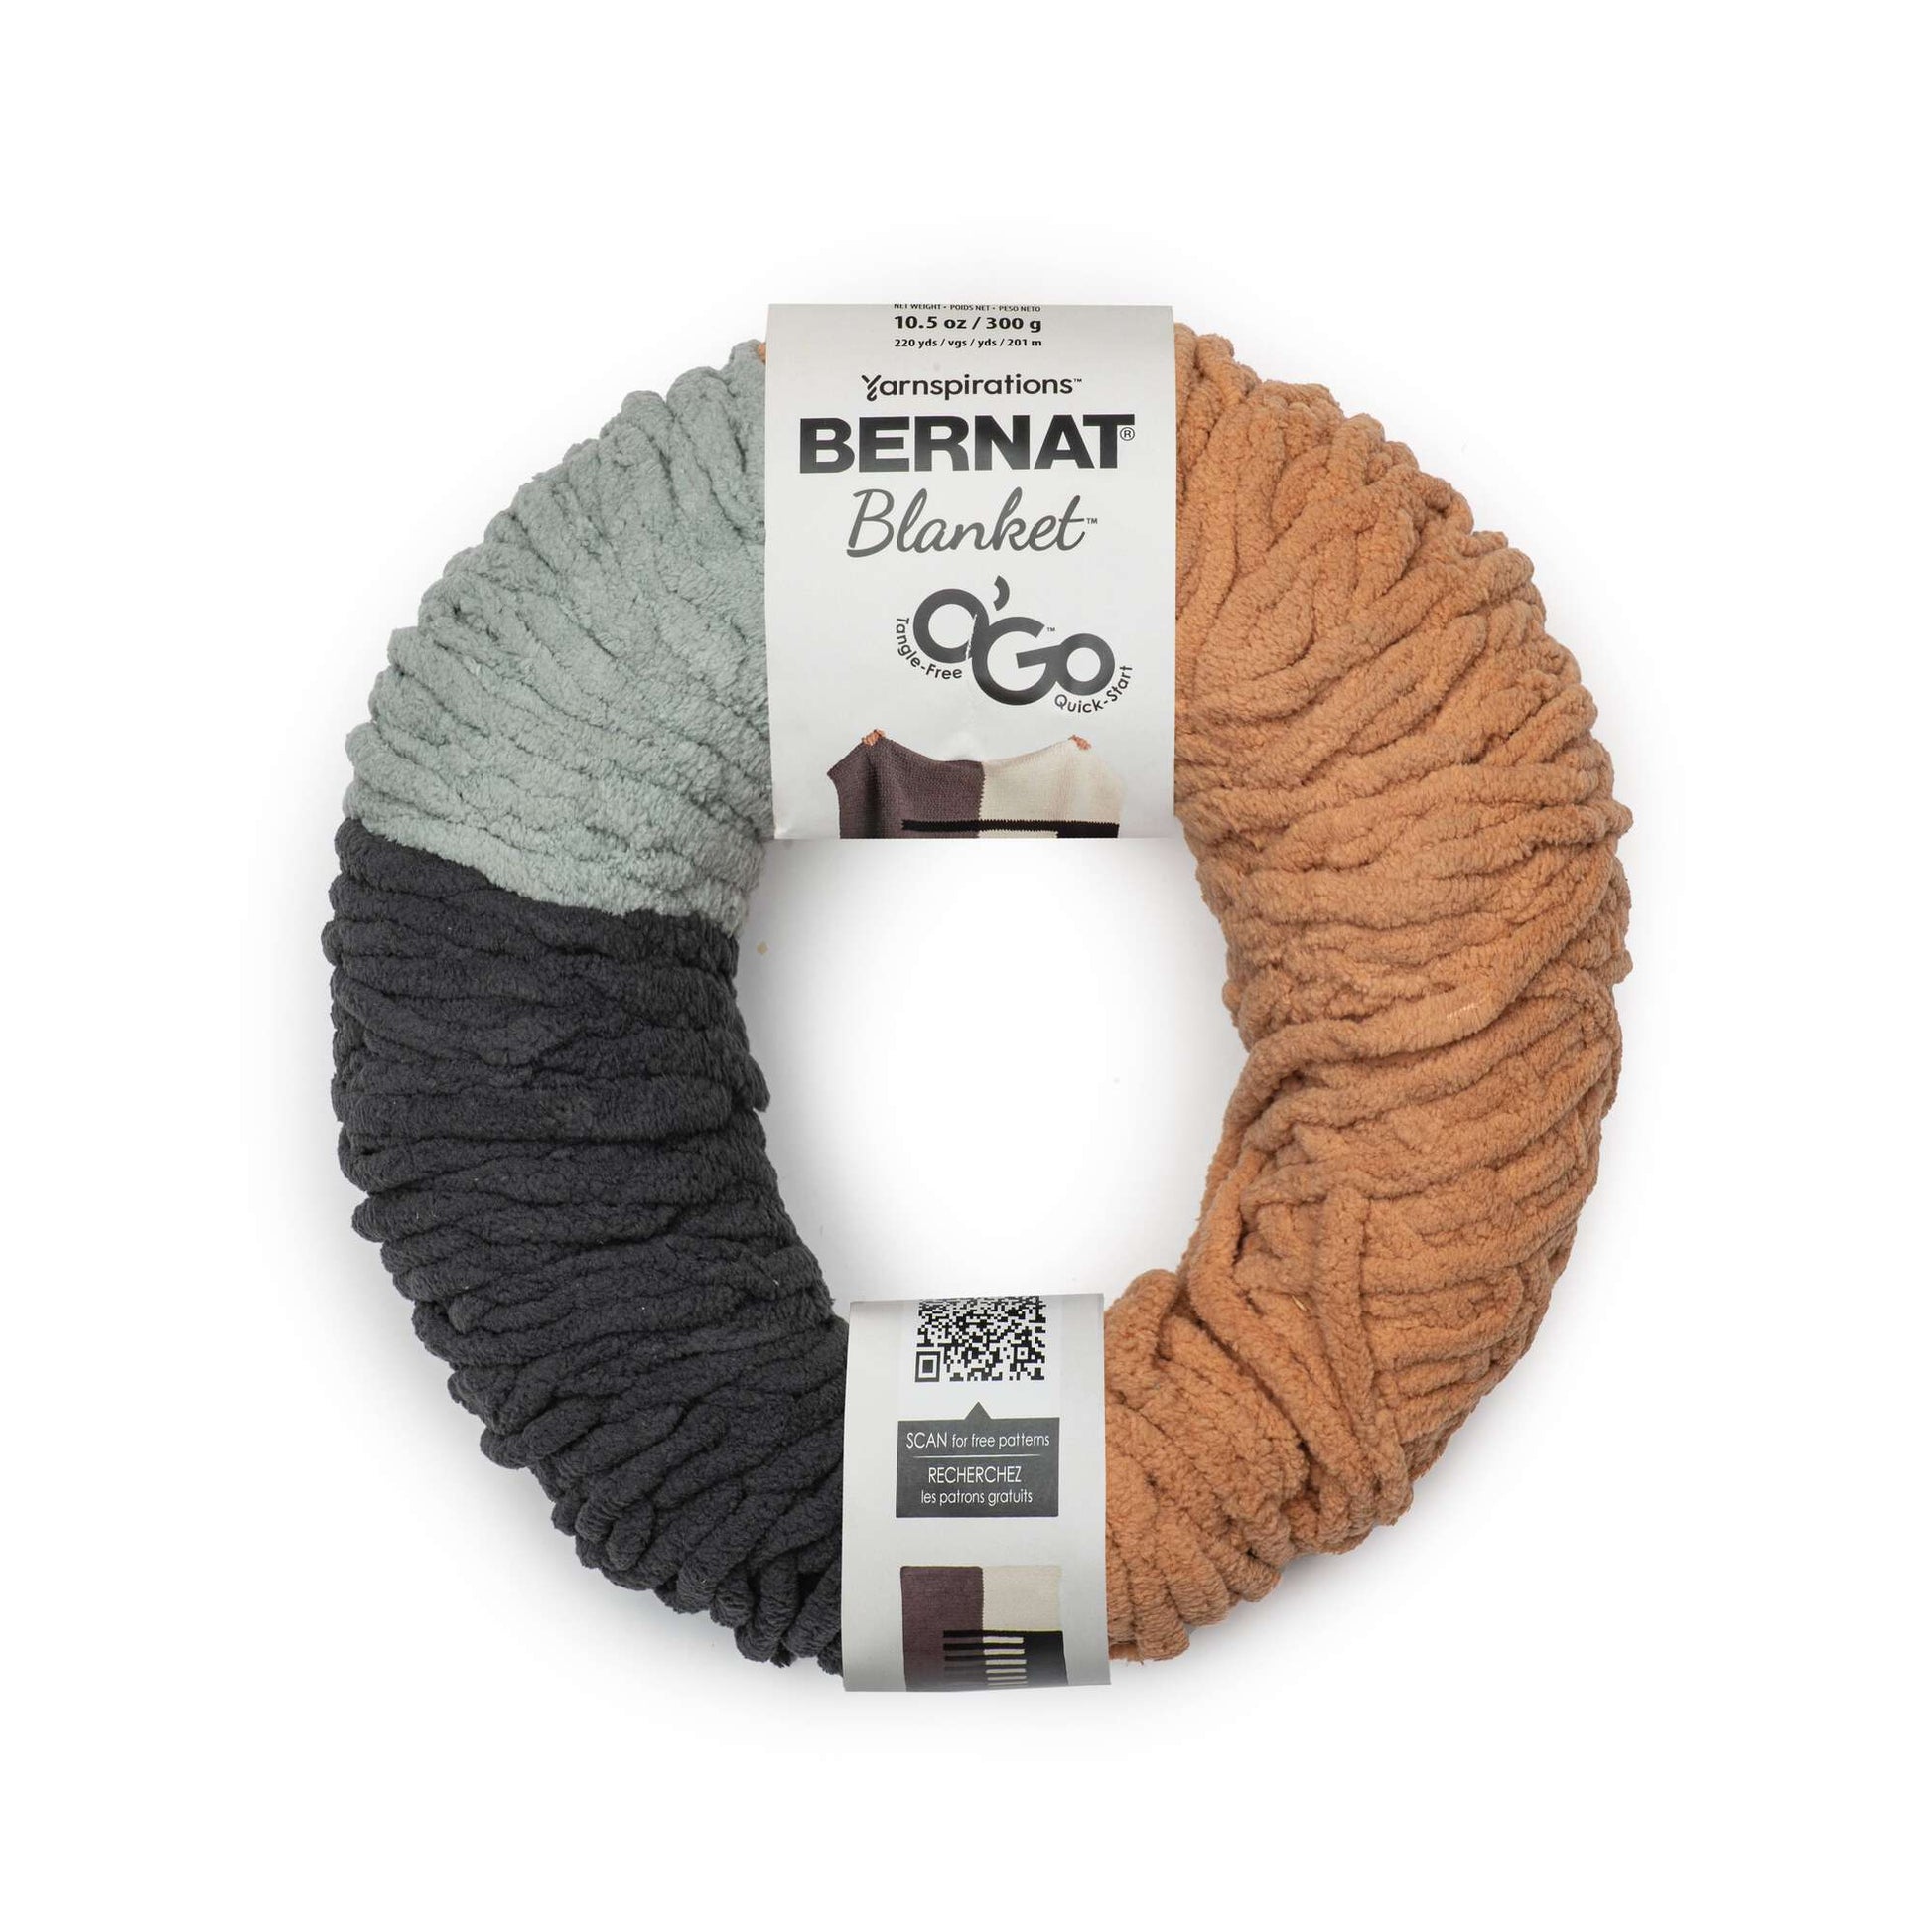 Bernat Blanket O'Go Yarn (300g/10.5oz) - Clearance Shades* Art Nouveau